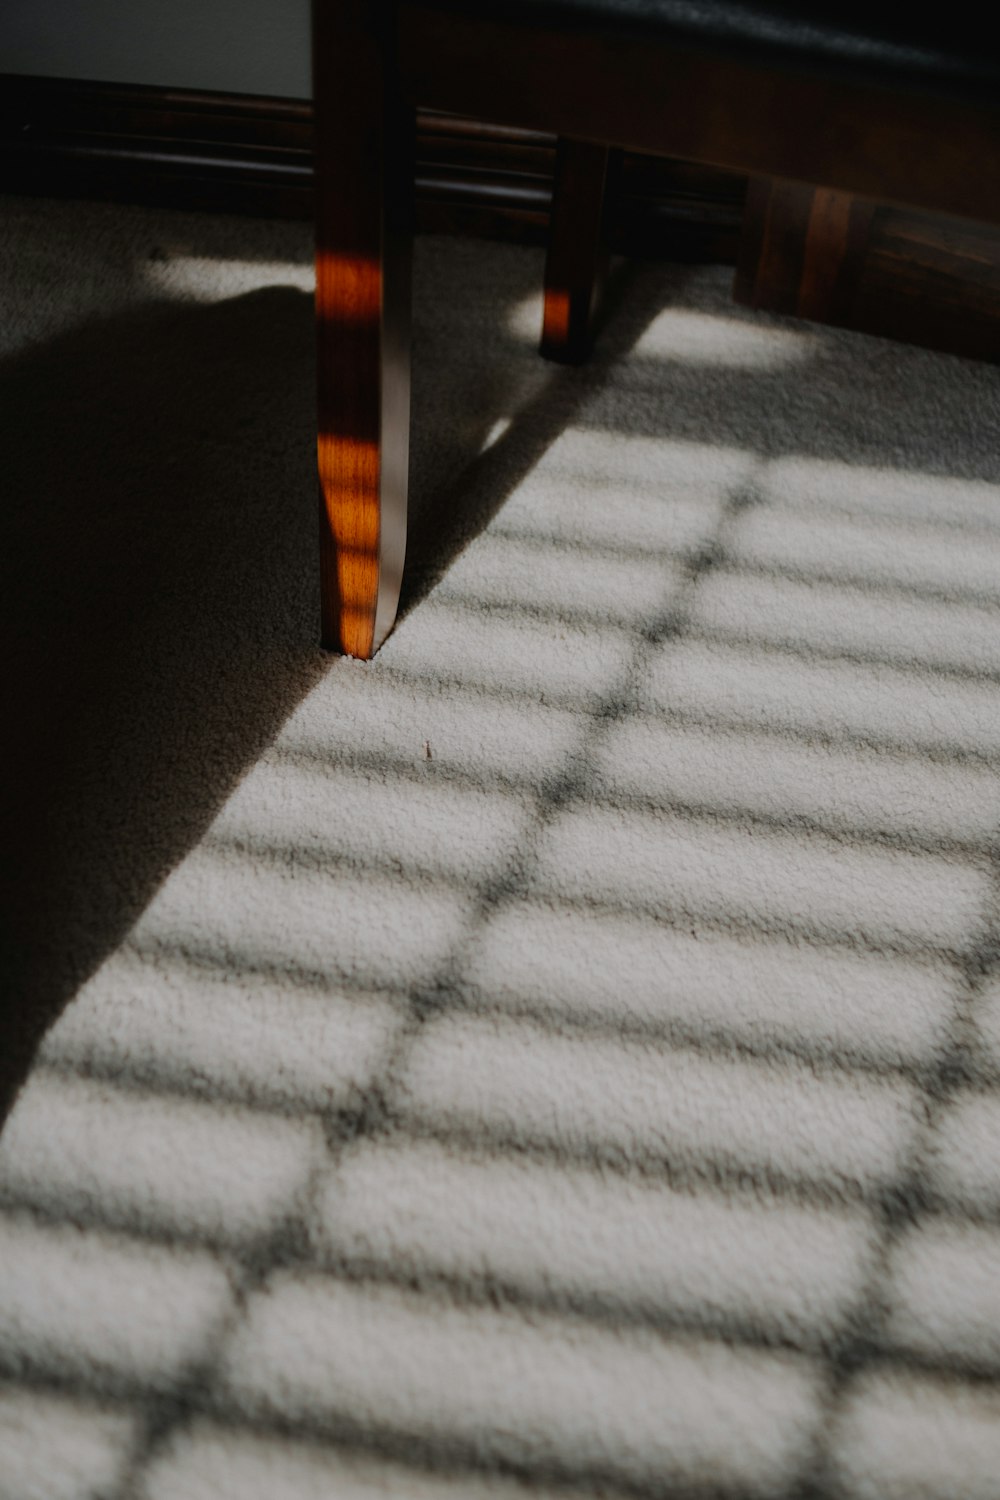 L'ombra di una panchina su un tappeto